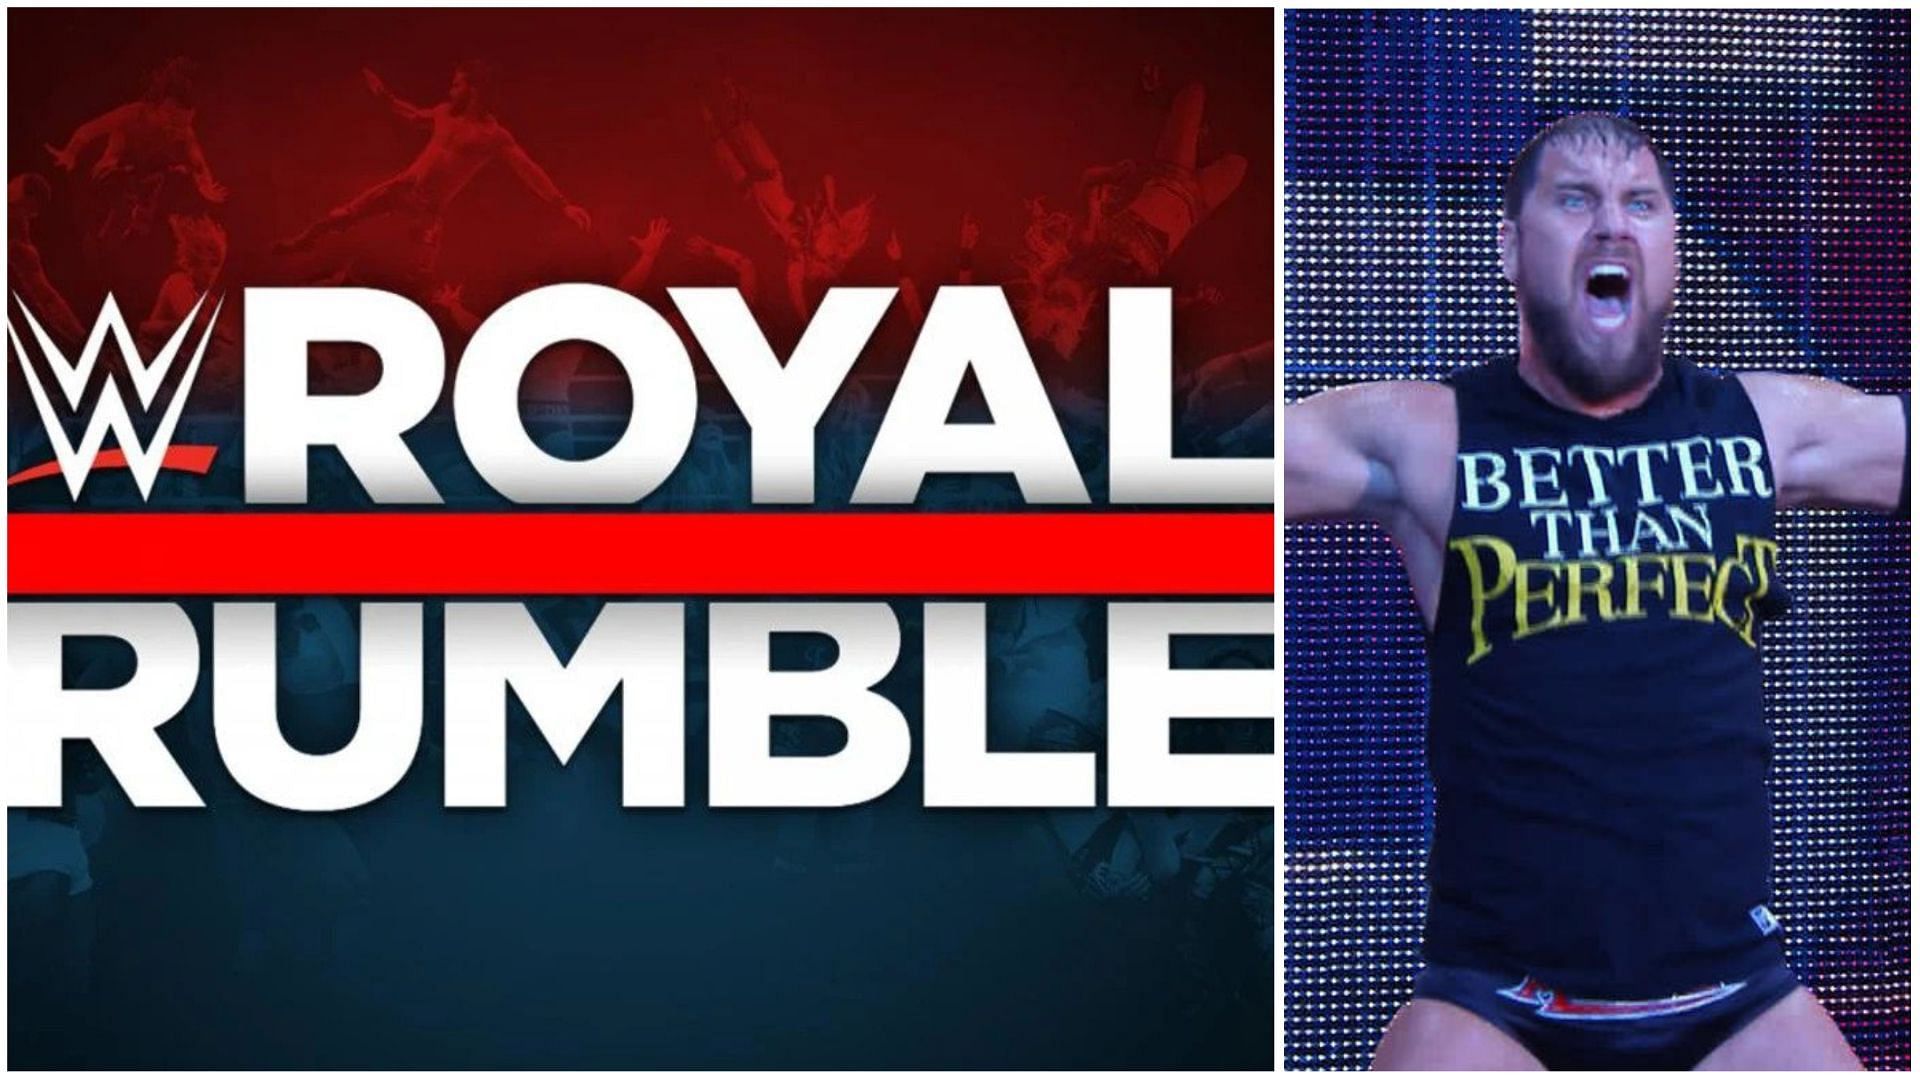 Royal Rumble WWE superstar curtis axel